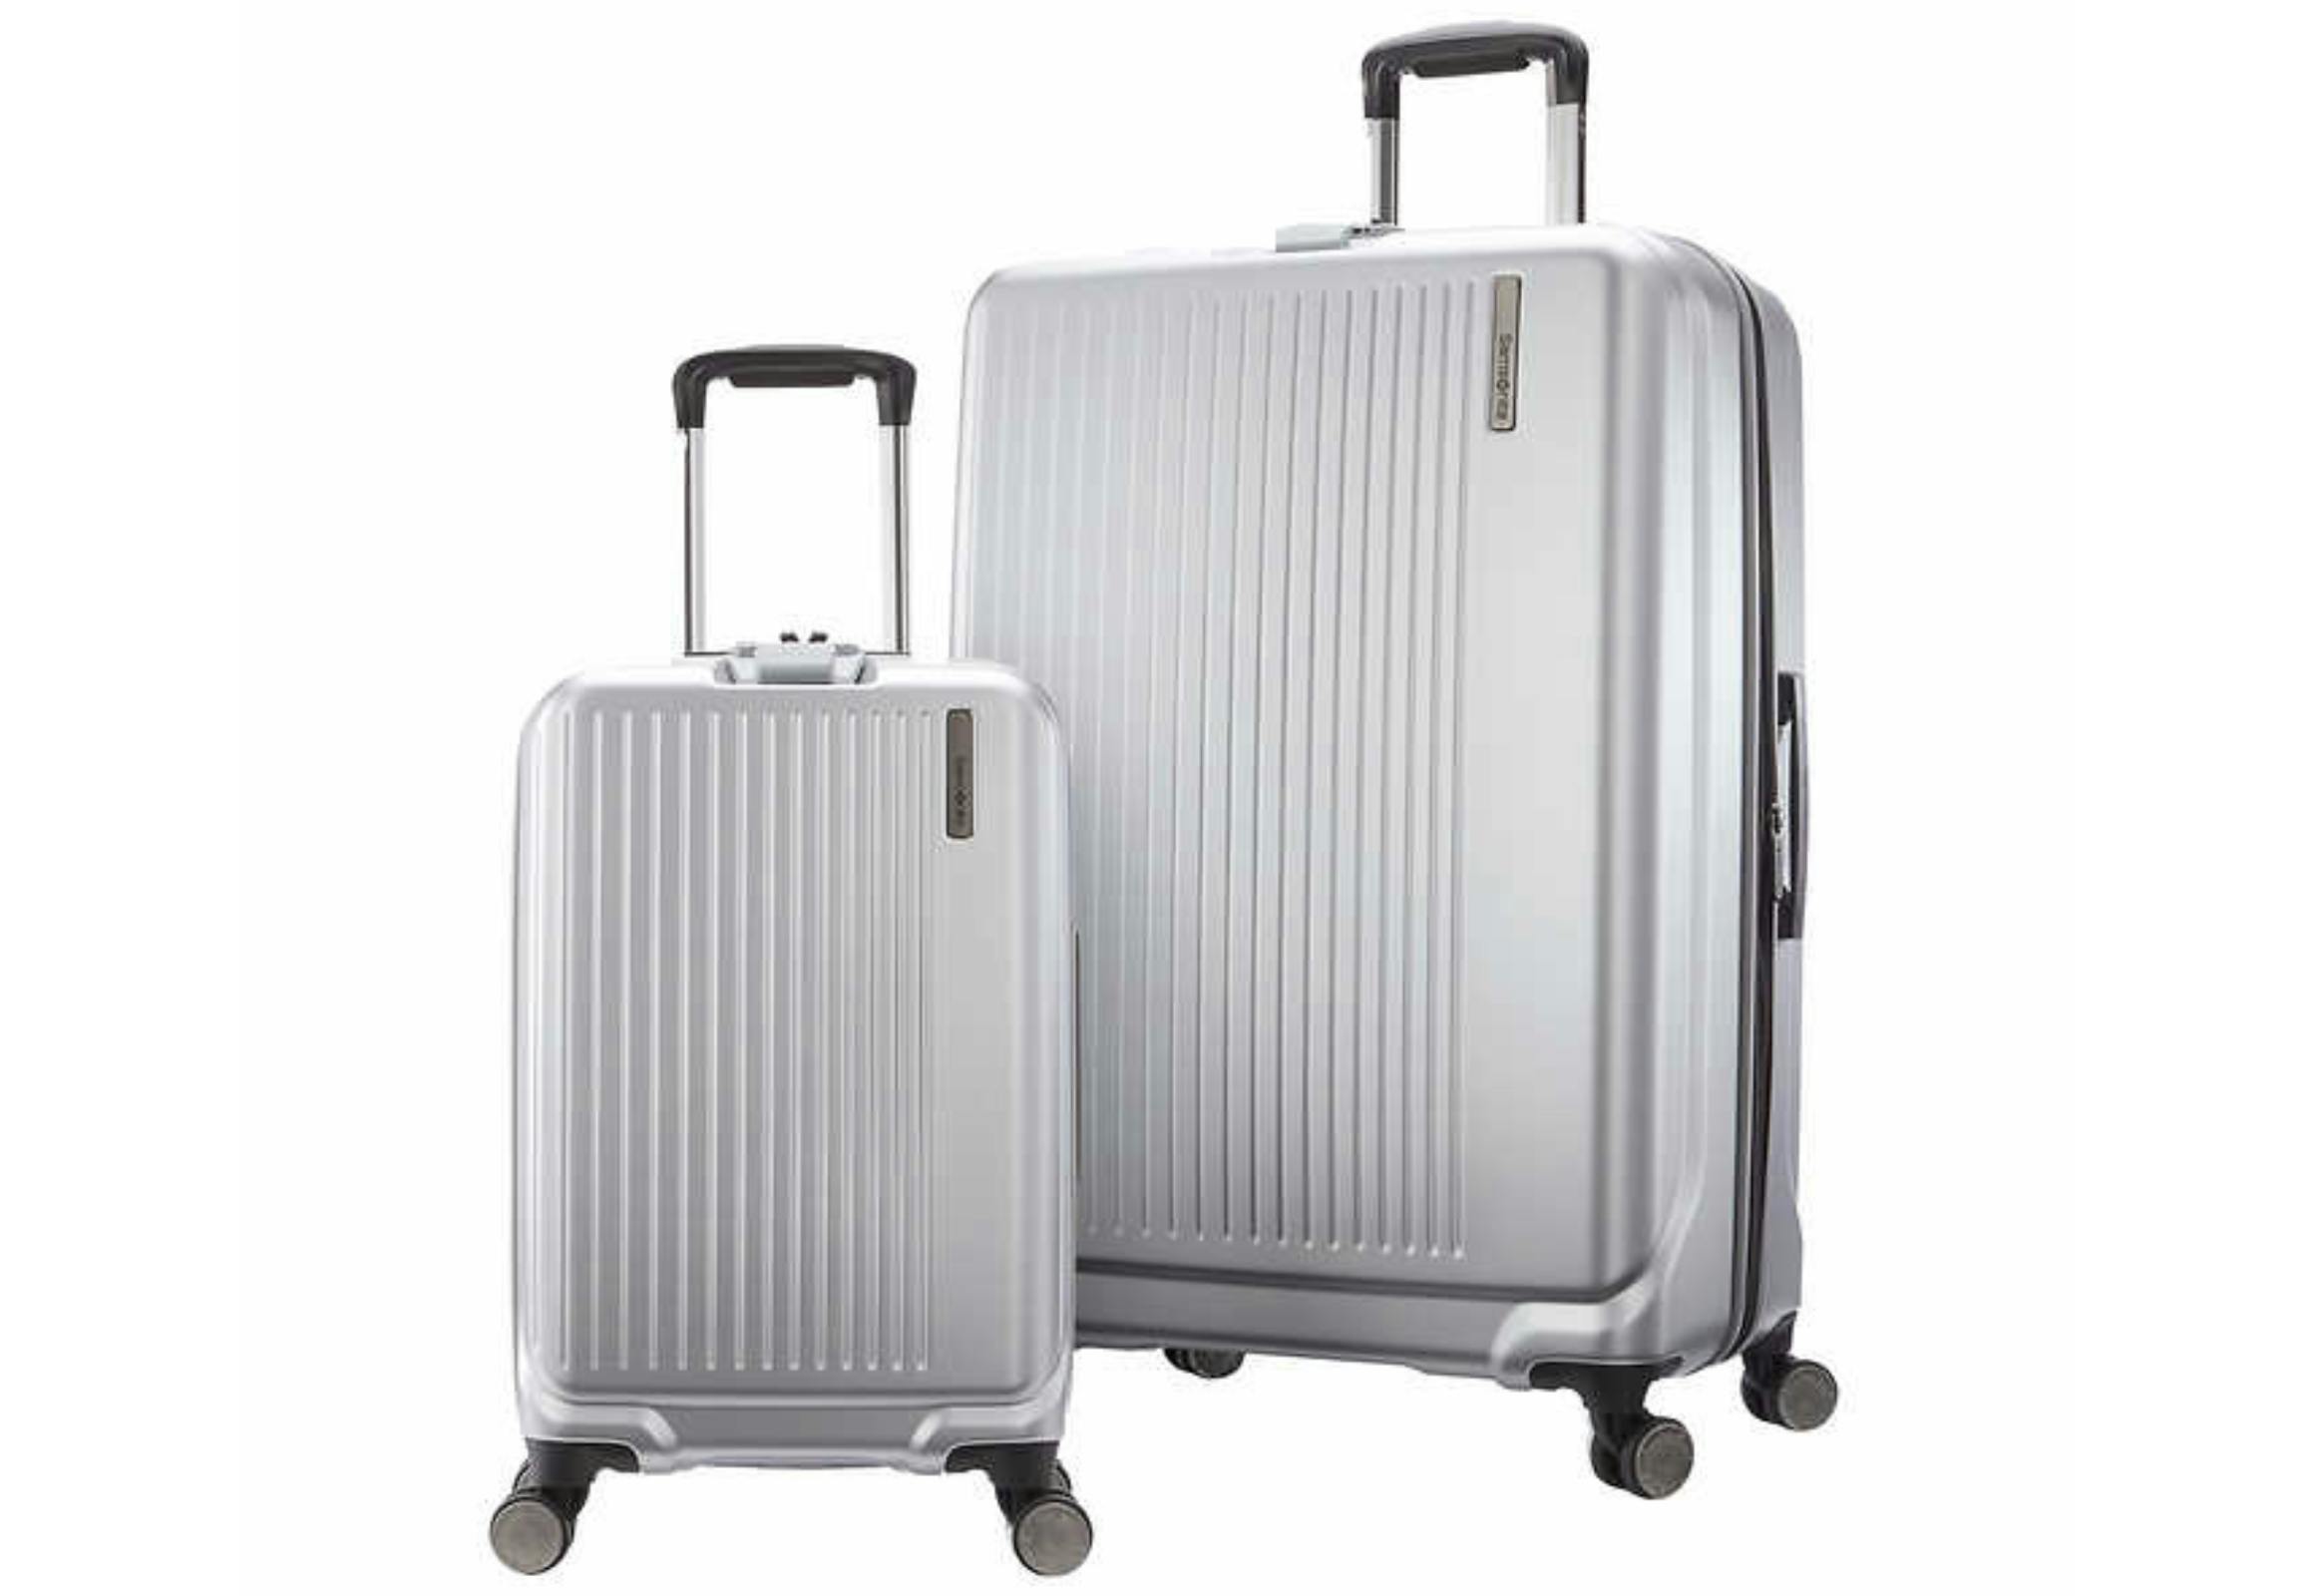 Save $50 on Samsonite Amplitude 2-Piece Luggage Set at Costco - The ...